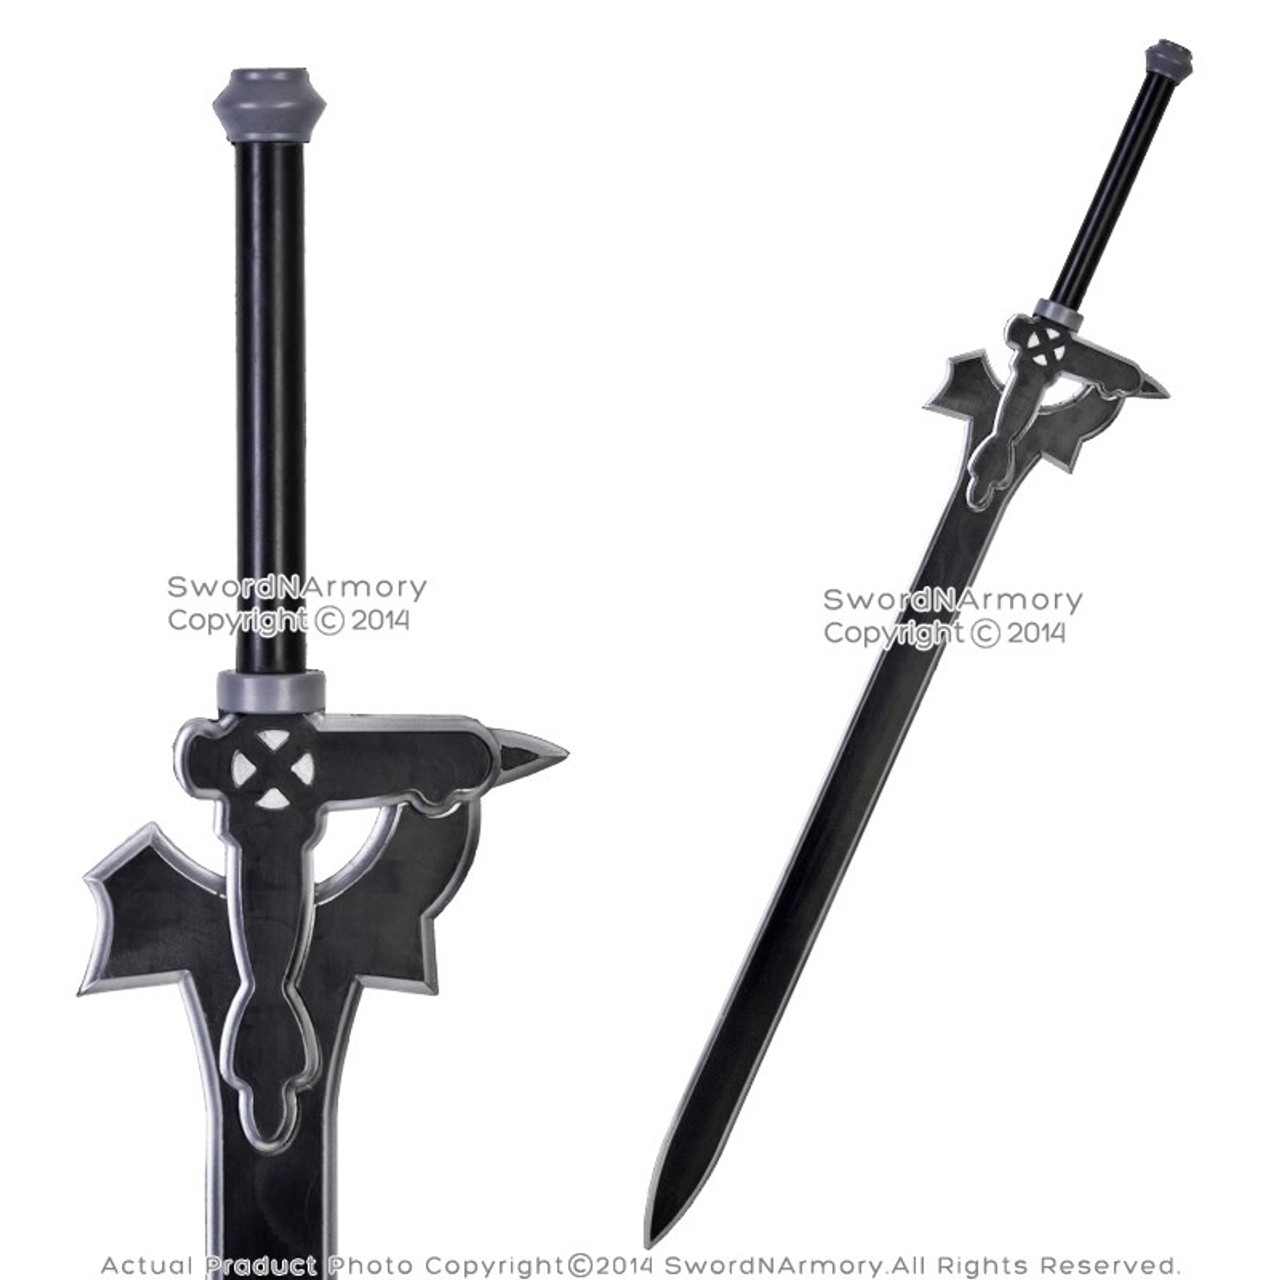 Anime Sword - The Best Anime Swords, Anime Knife, Anime Weapons Store